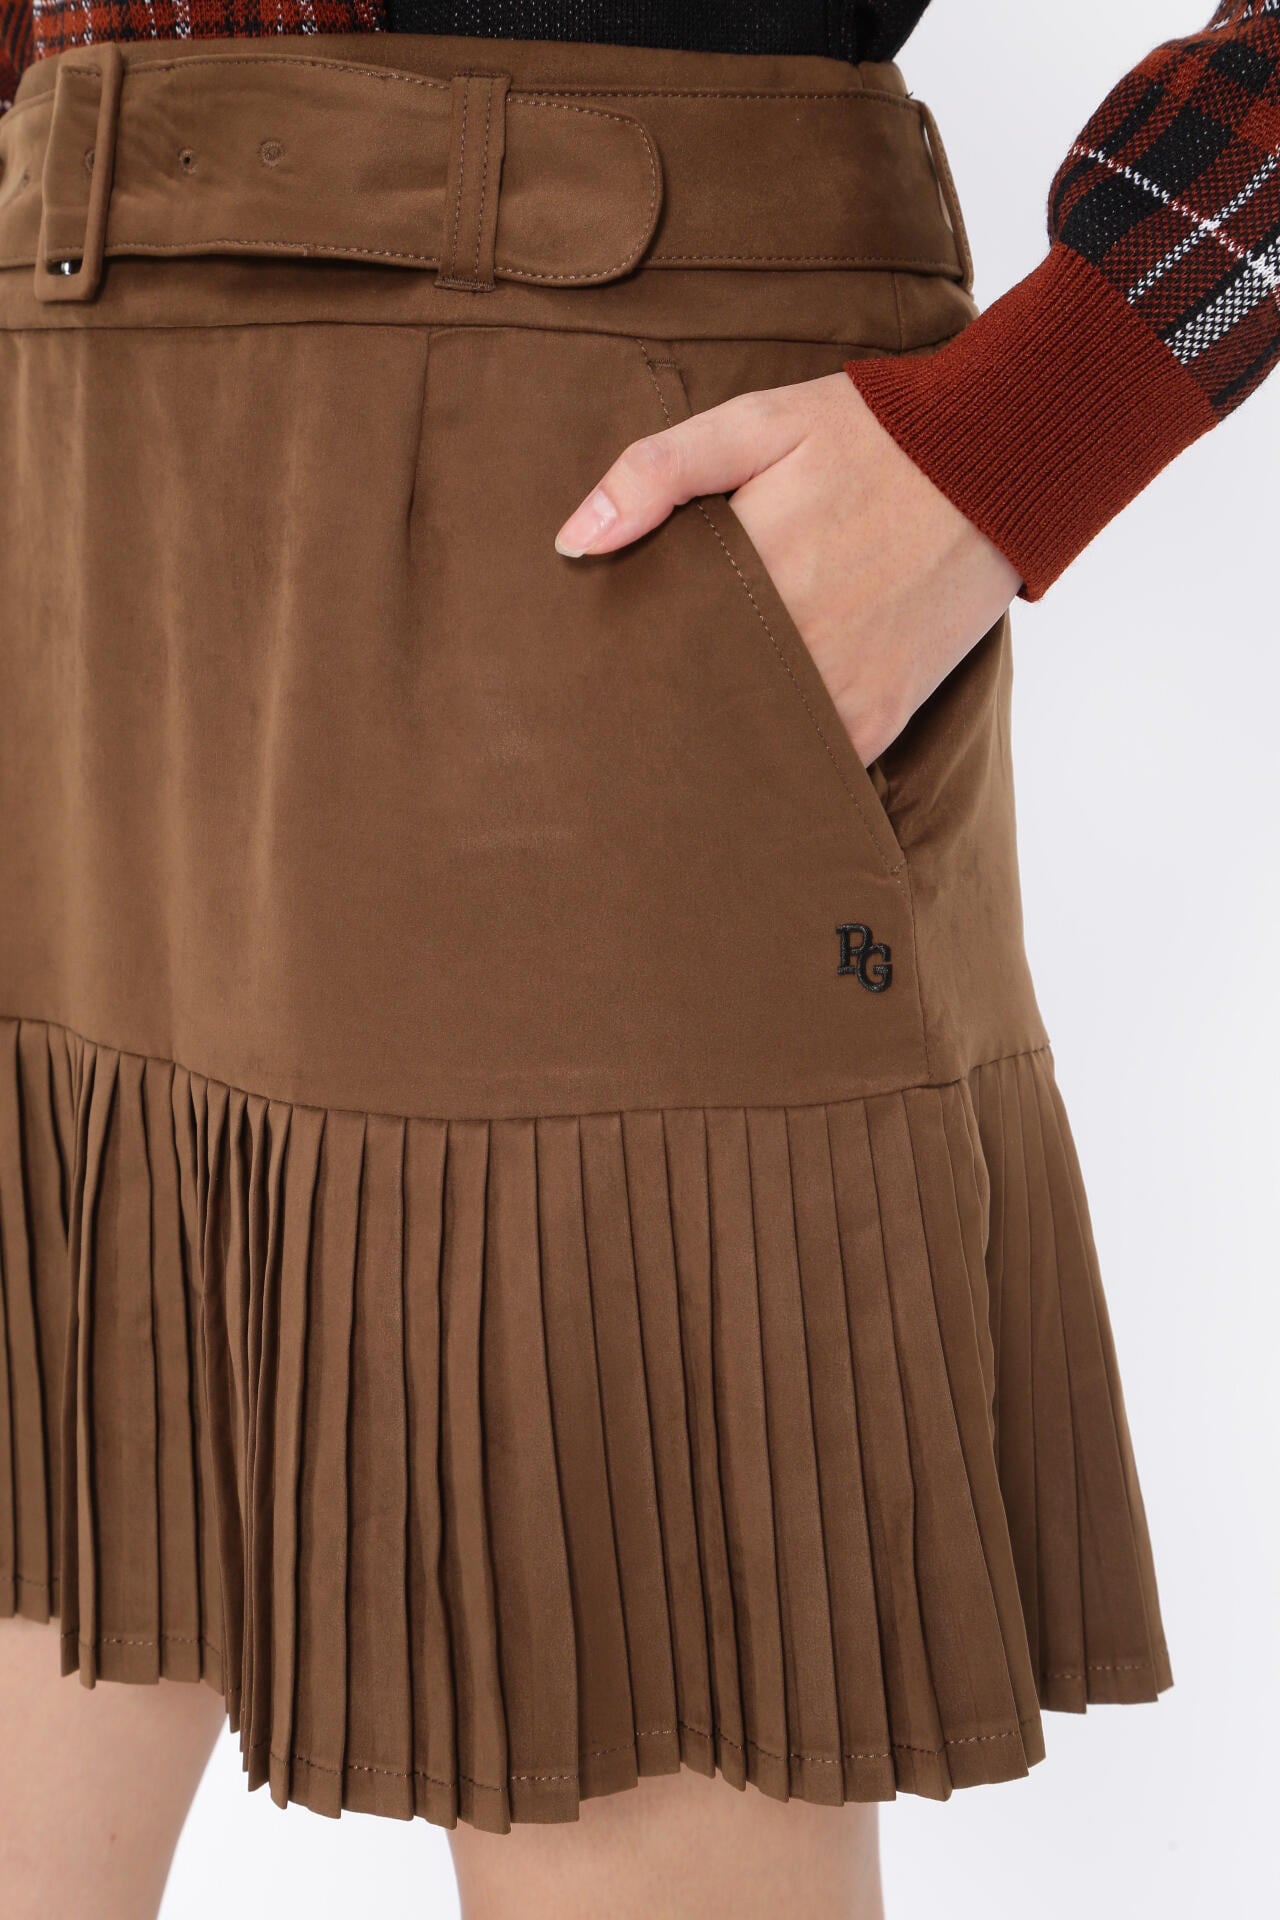 BURBERRY スカート92cm - スカート